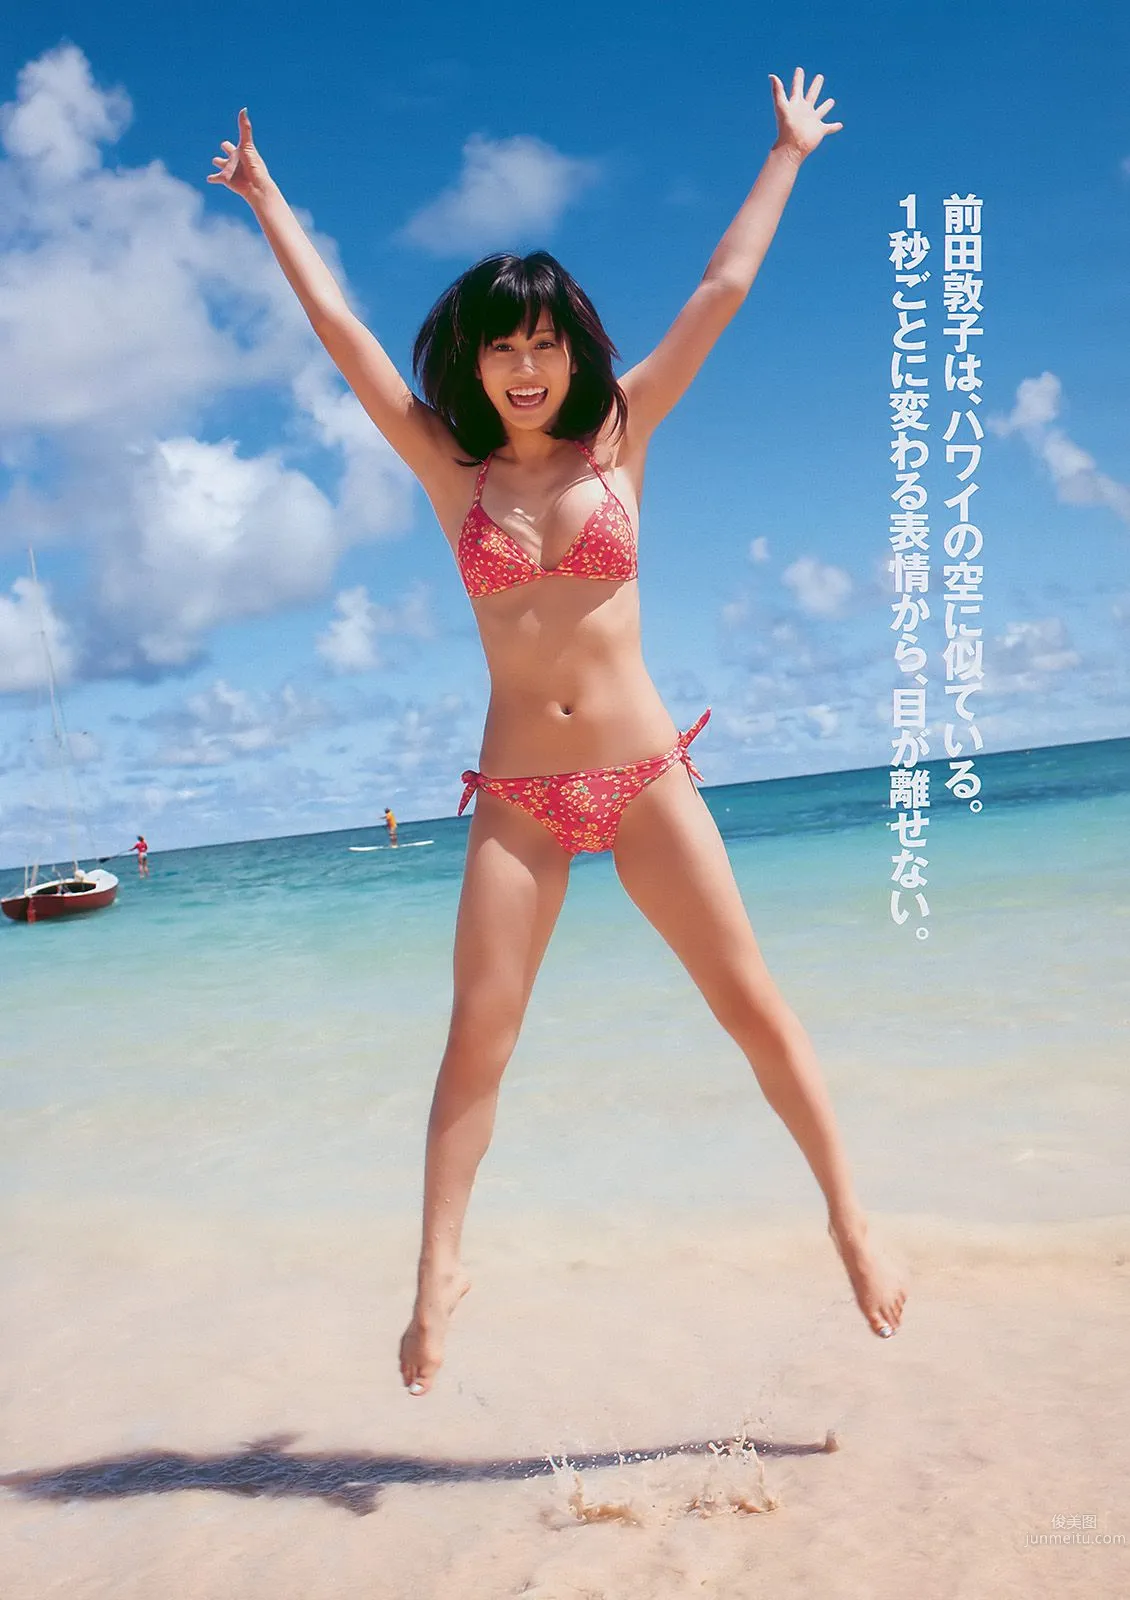 前田敦子 秋山莉奈 エリナ 佐藤寛子 AKB48 [Weekly Playboy] 2010年No.10 写真杂志6